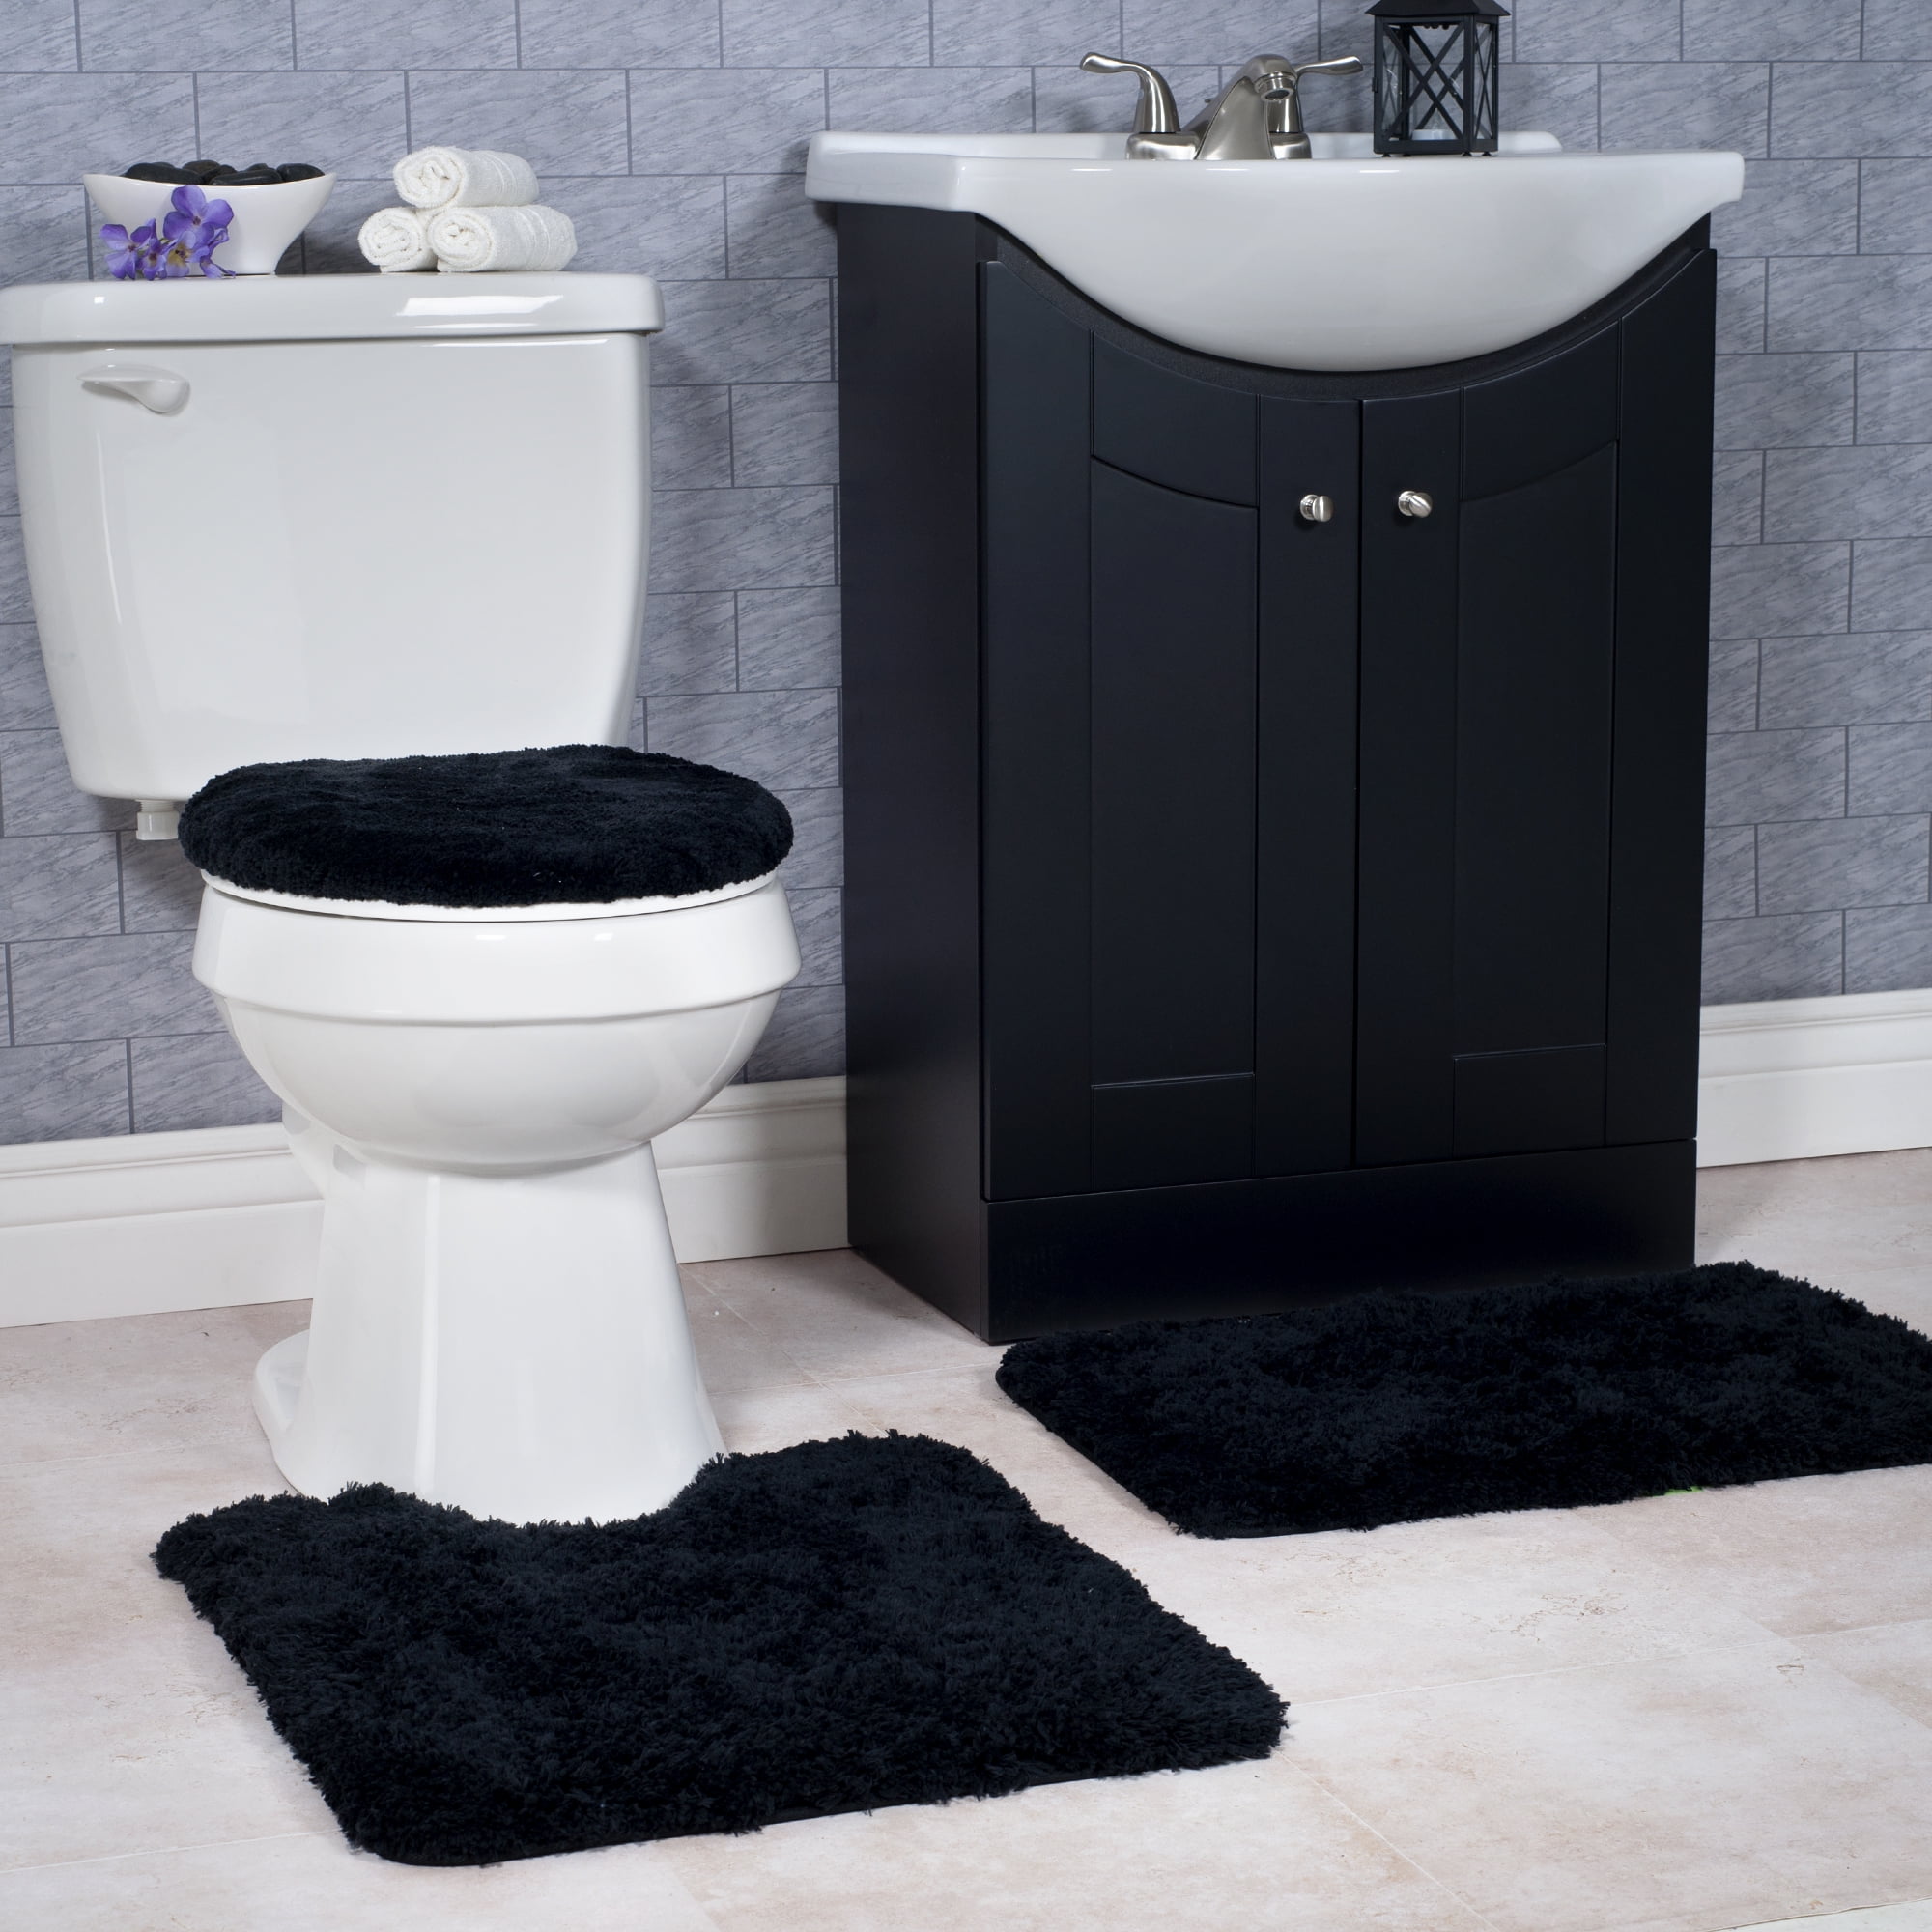 Includes U-Shape Contoured Toilet Mat & Bath Rug & Lid Cover Soft Chenille Bath Mats Set Serenable 3 Pieces Bathroom Rugs Set